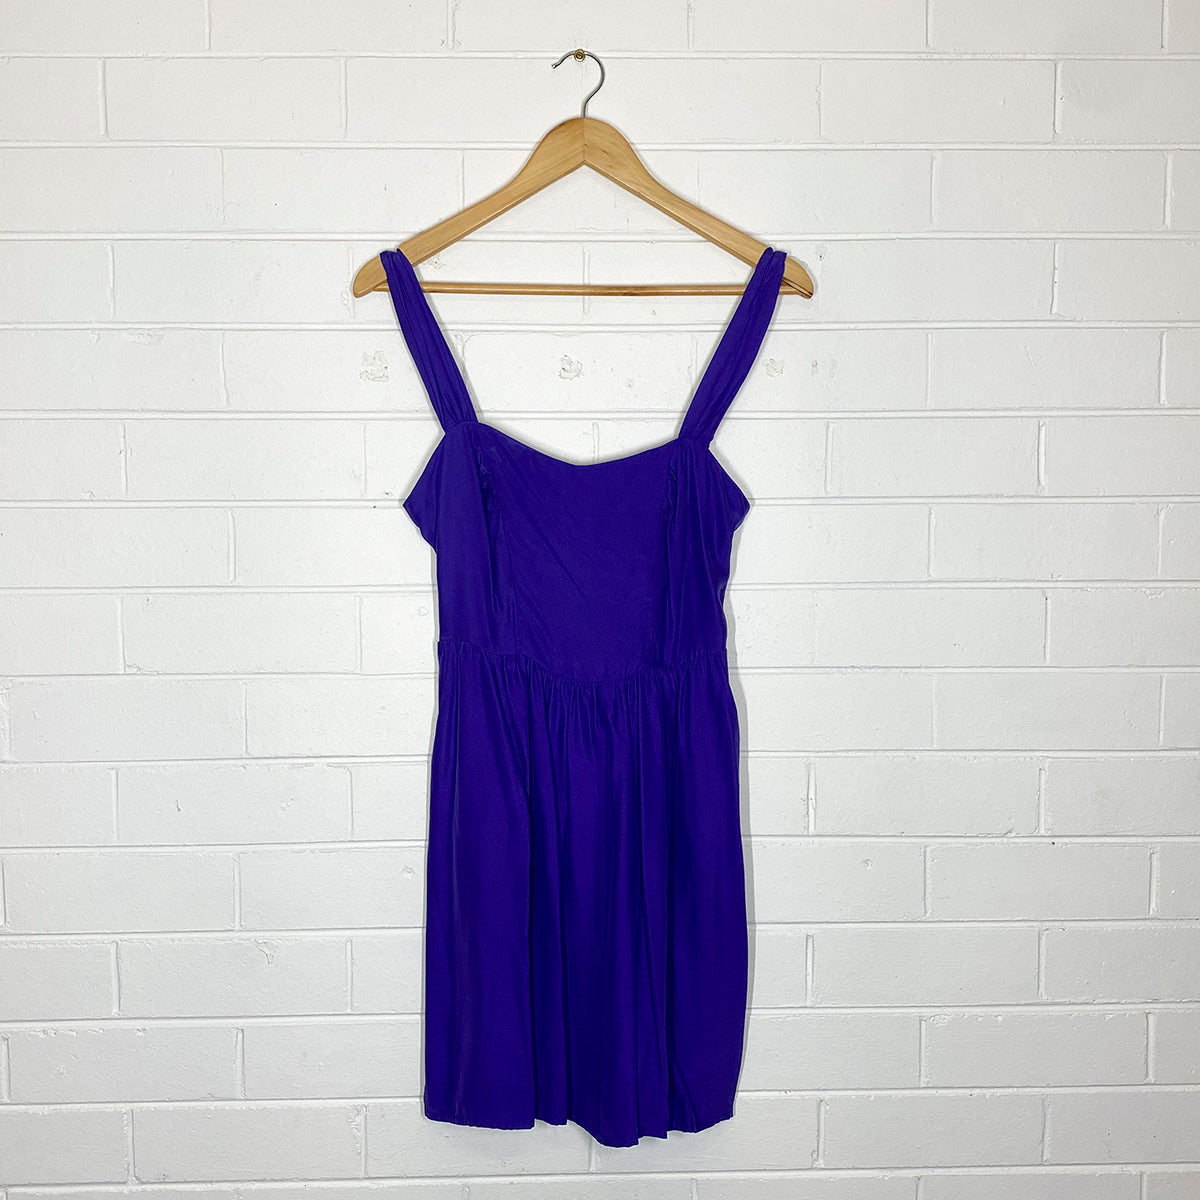 Bettina Liano | dress | size 8 | knee length | 100% silk | new with tags